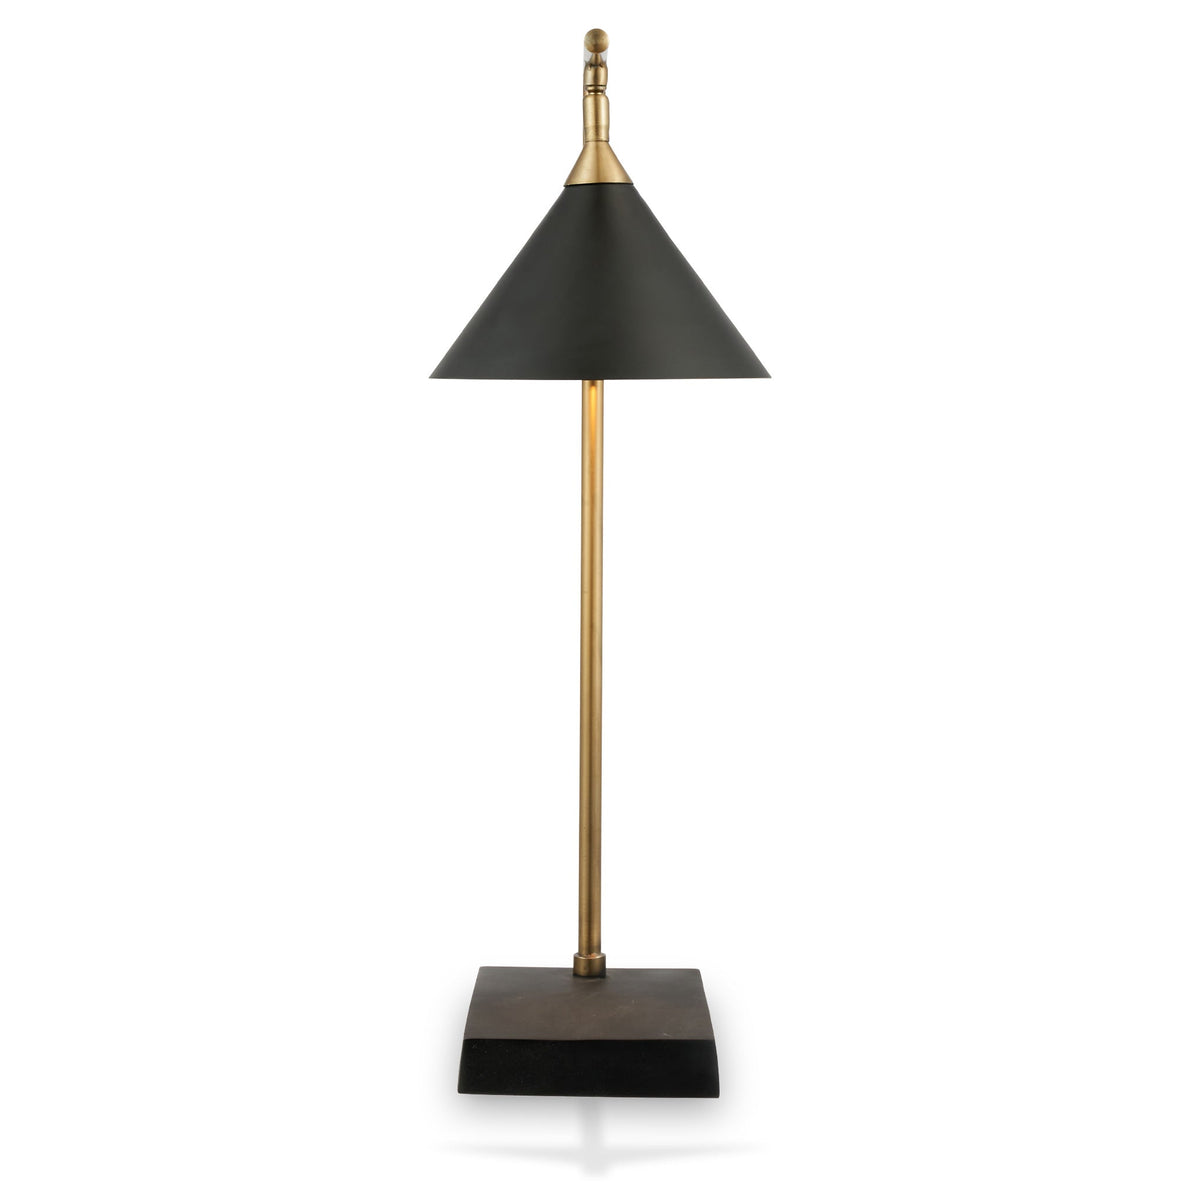 Zeta Matt Black and Antique Brass Desk Lamp